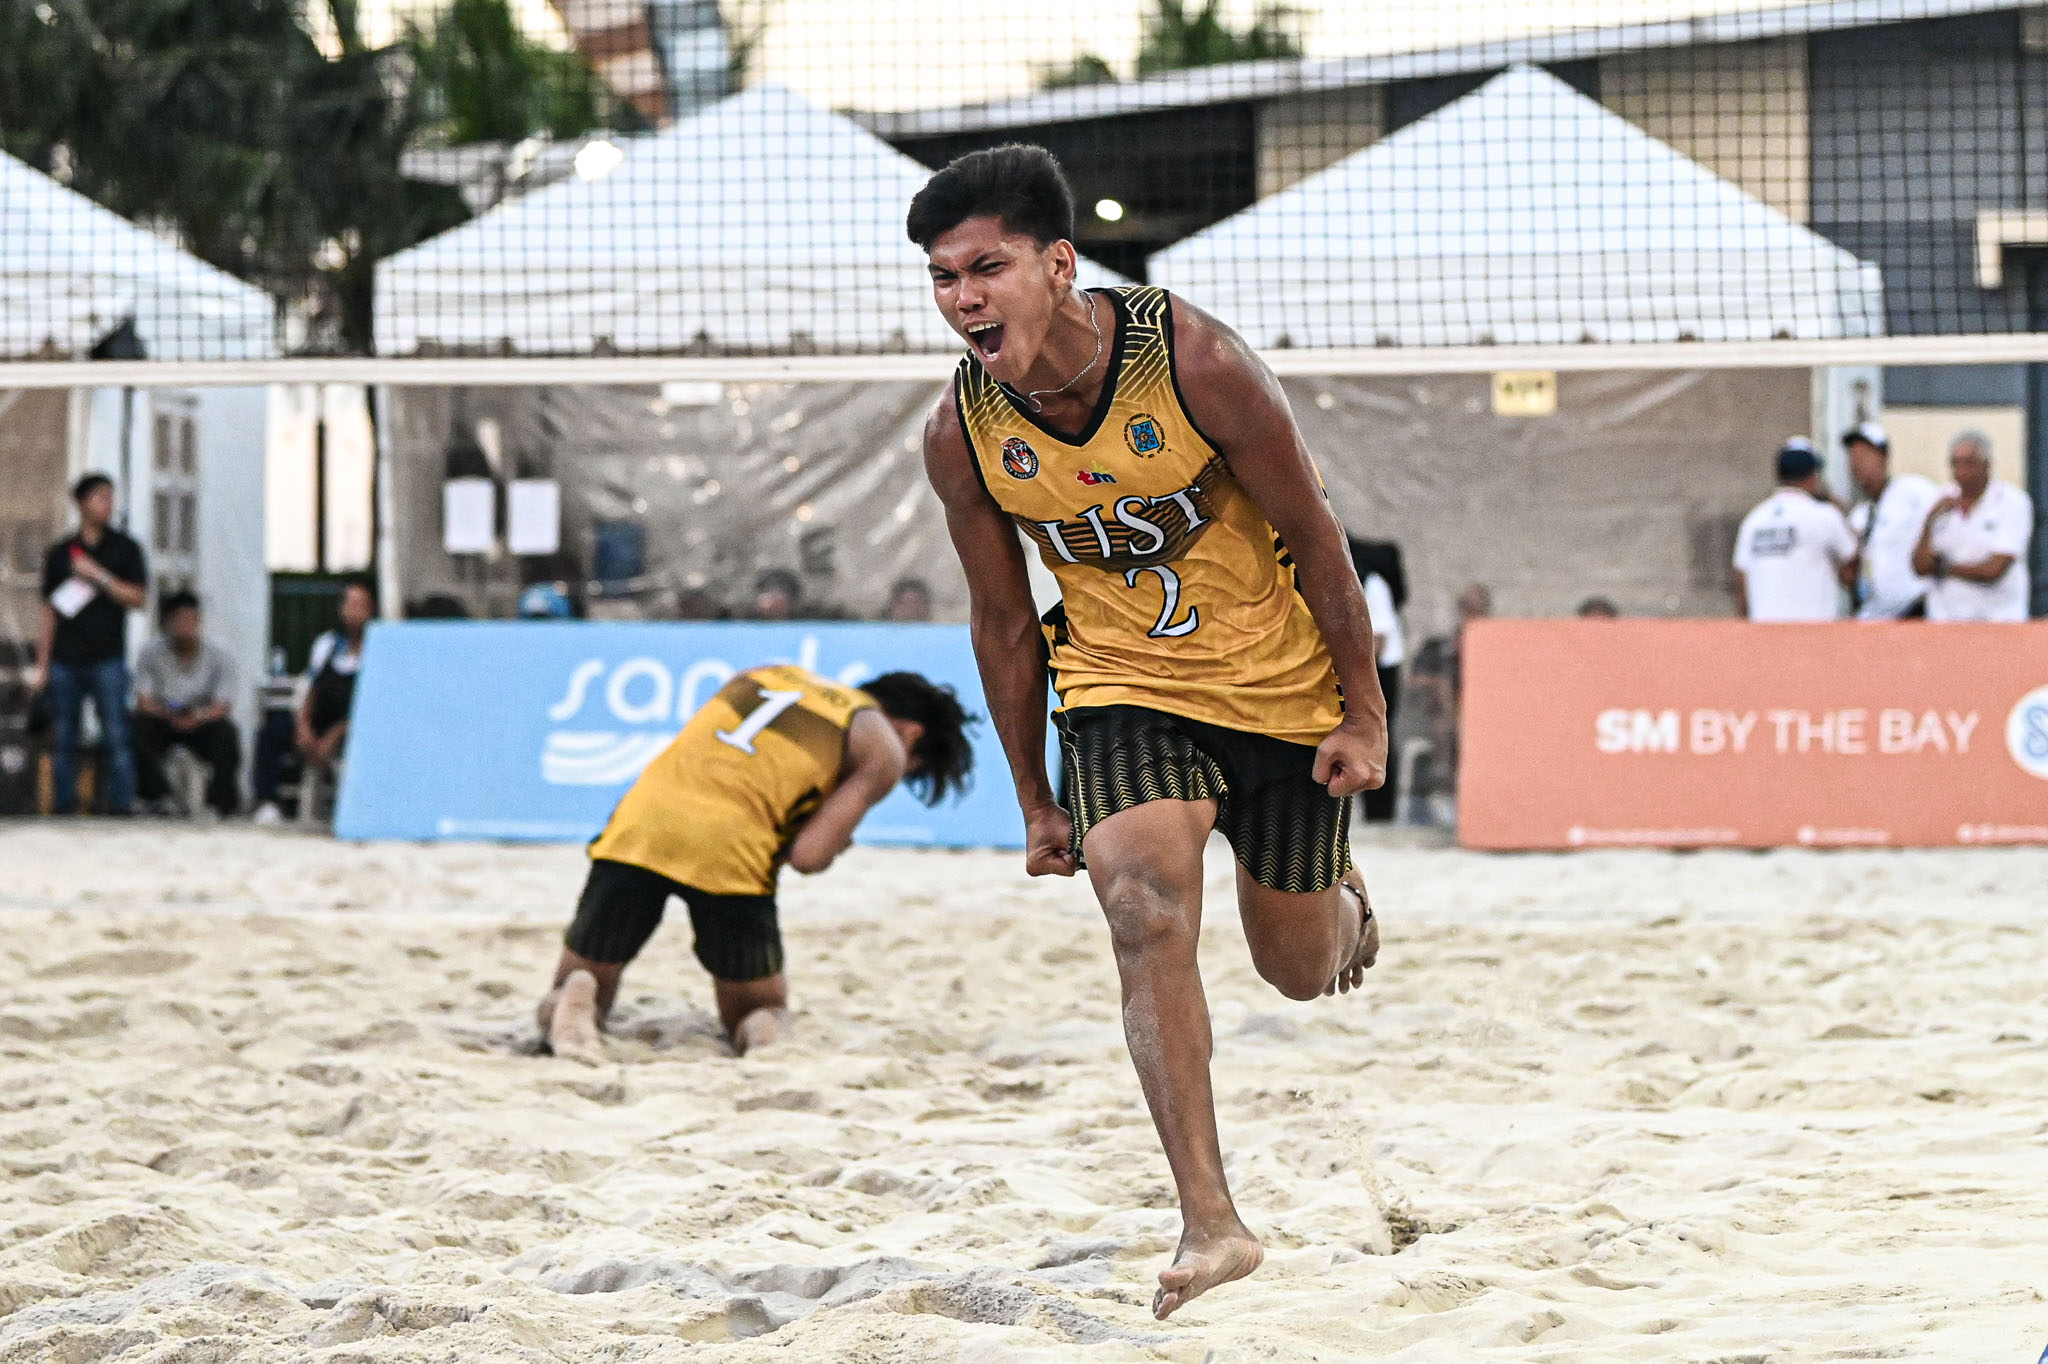 UAAP86-MBVB-Rancel-Varga-5449 Eslapor-Pagara, Gupetio-Parga continue UST reign in UAAP beach volley ADMU Beach Volleyball FEU News NU UAAP UP UST  - philippine sports news